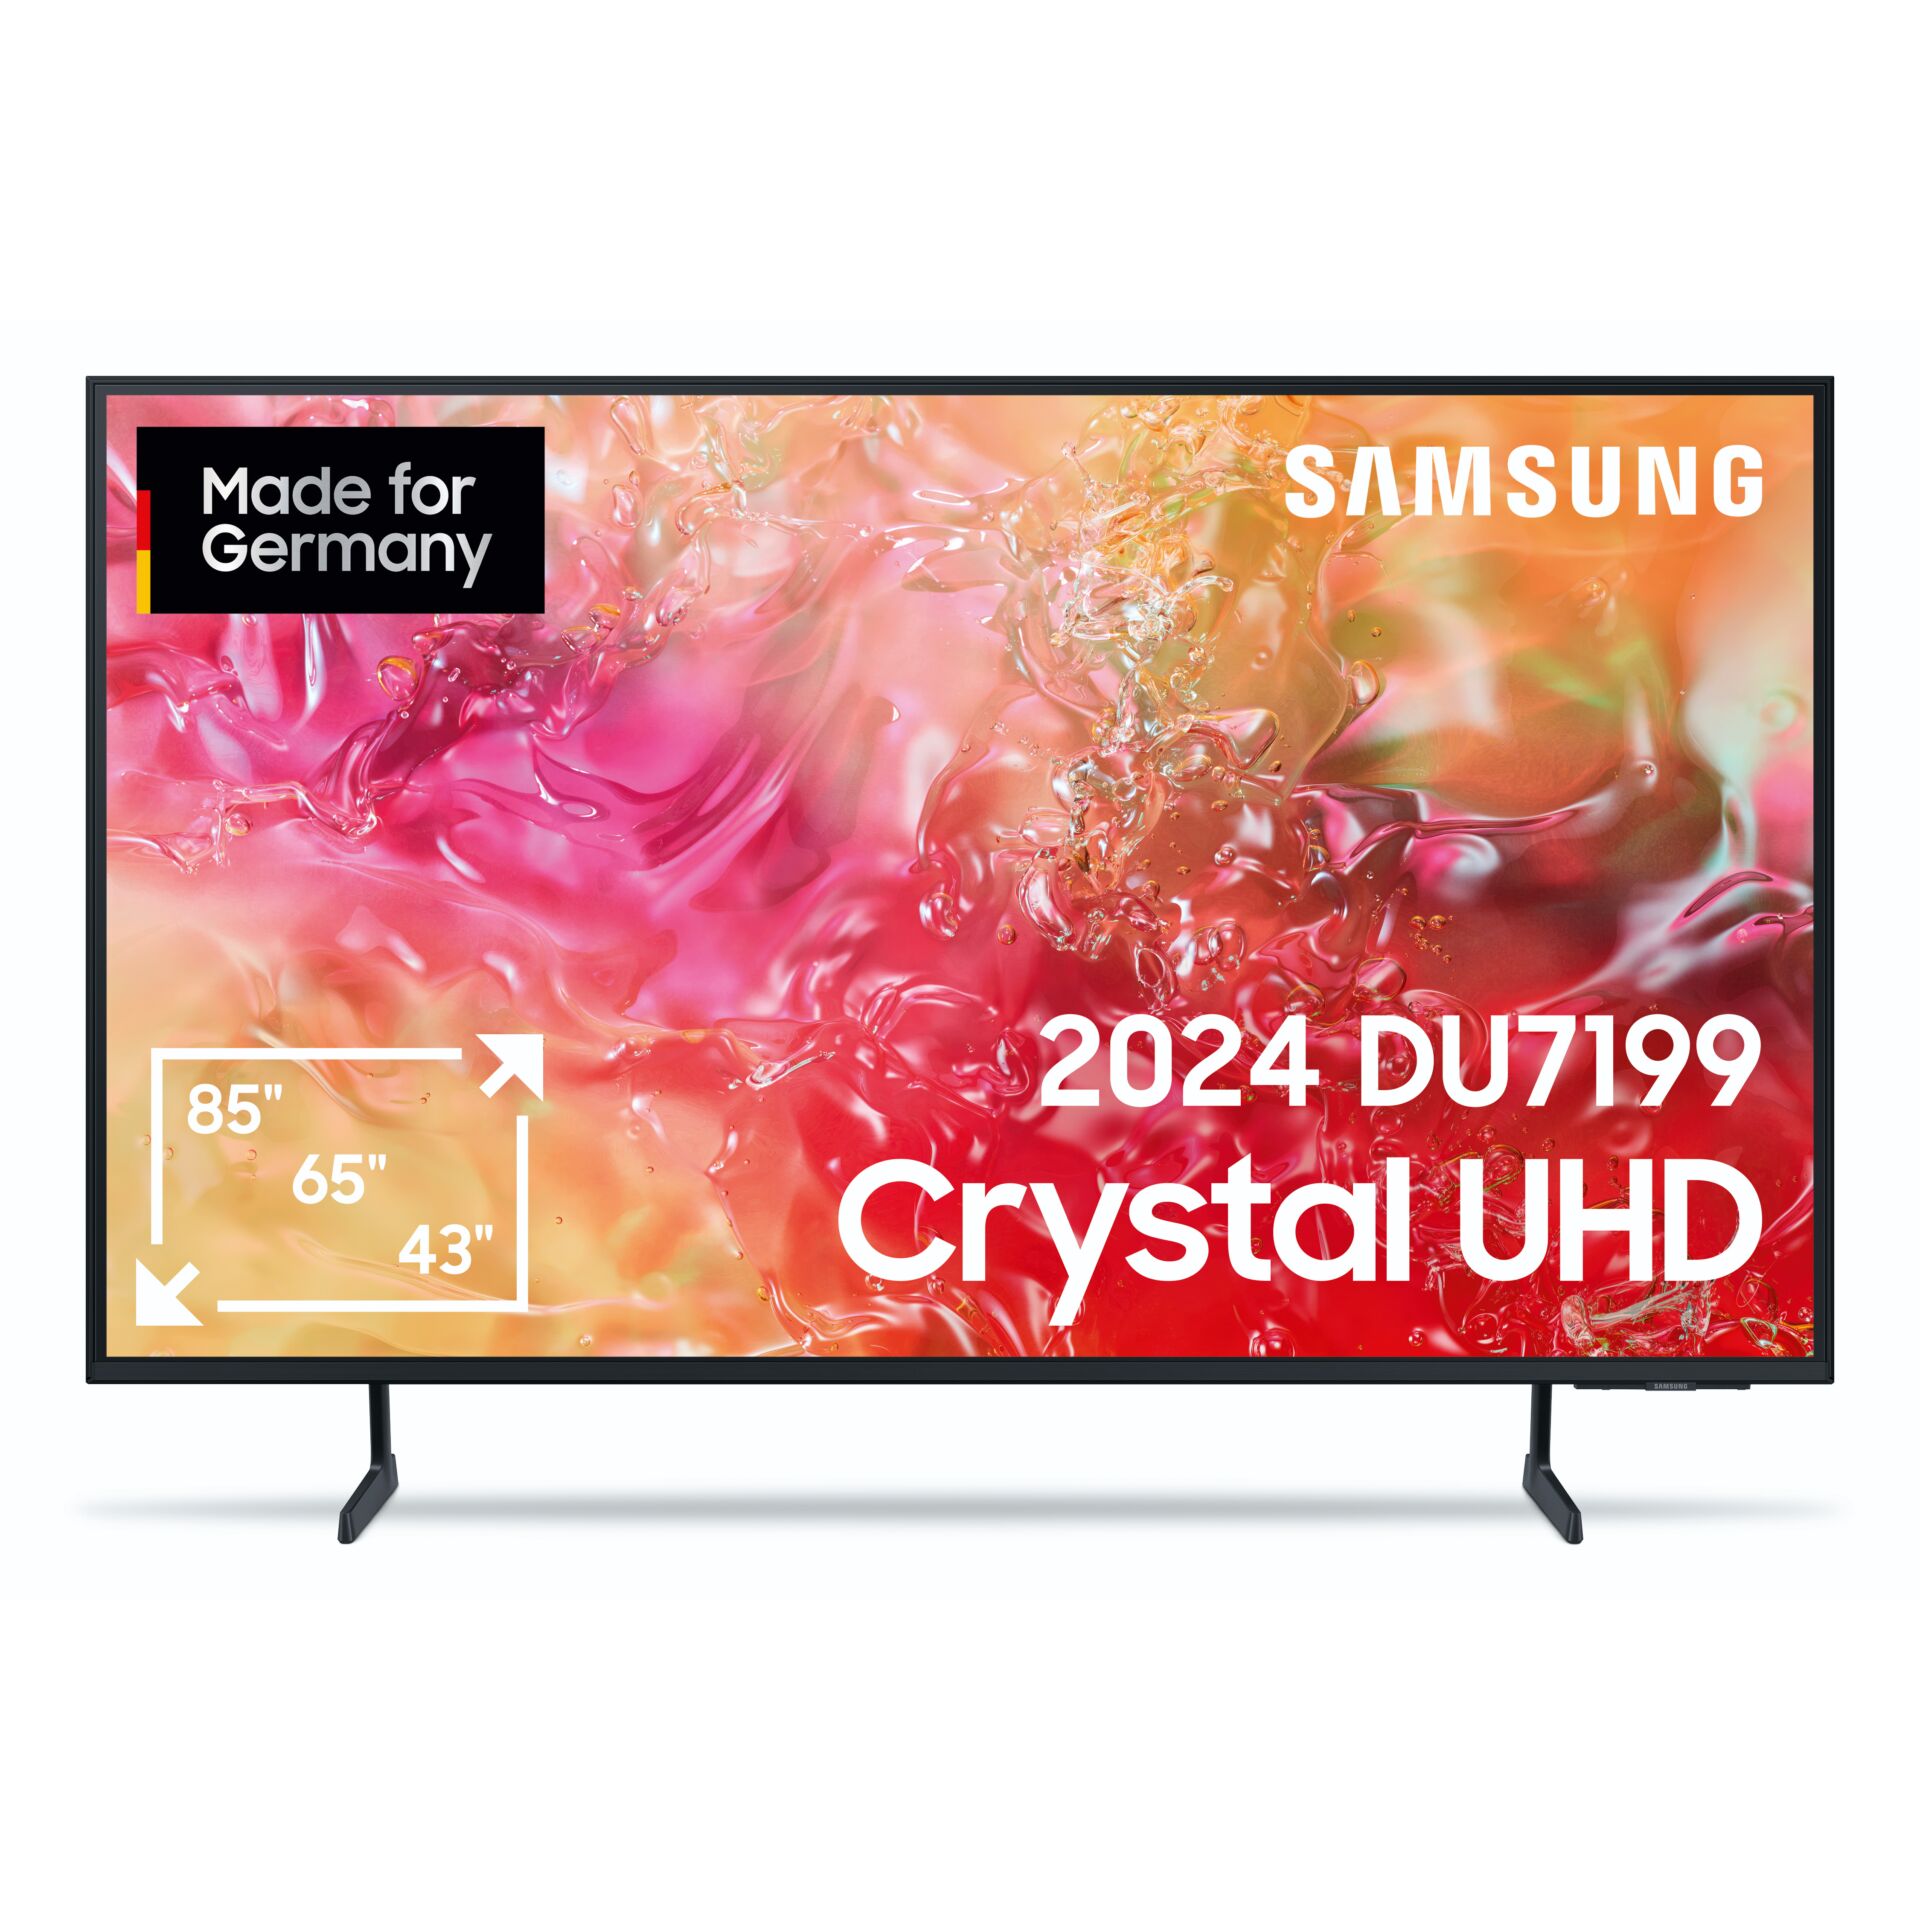 Samsung 43 Crystal UHD 4K DU7199 Tizen OS Smart TV (2024)